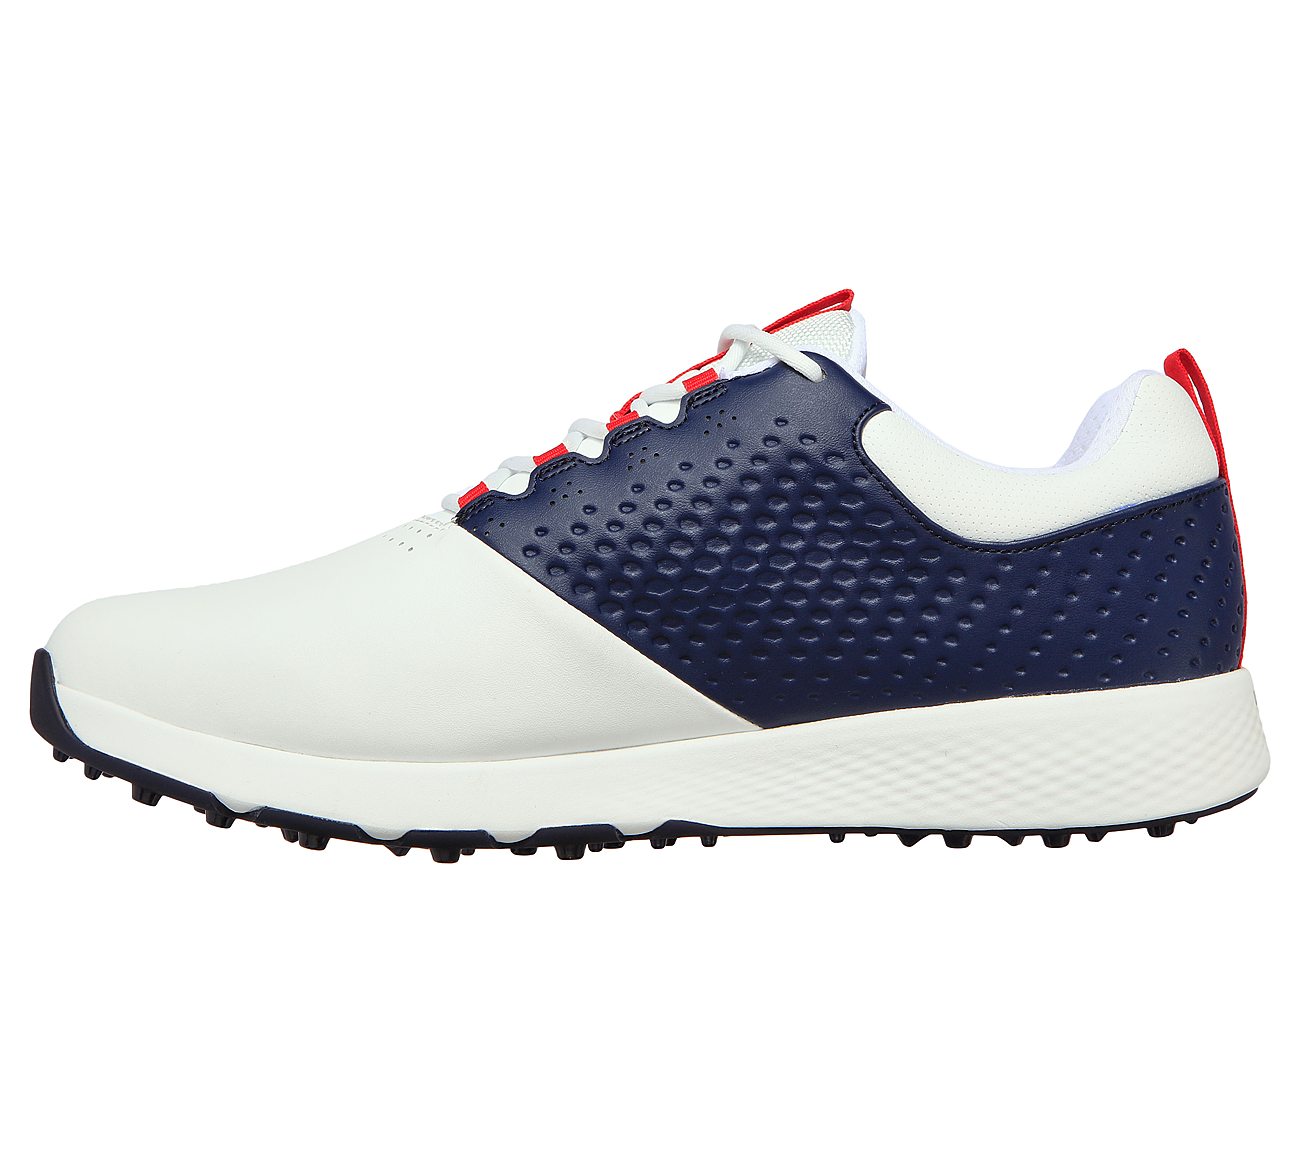 Buy > skechers spikeless golf shoes uk > in stock